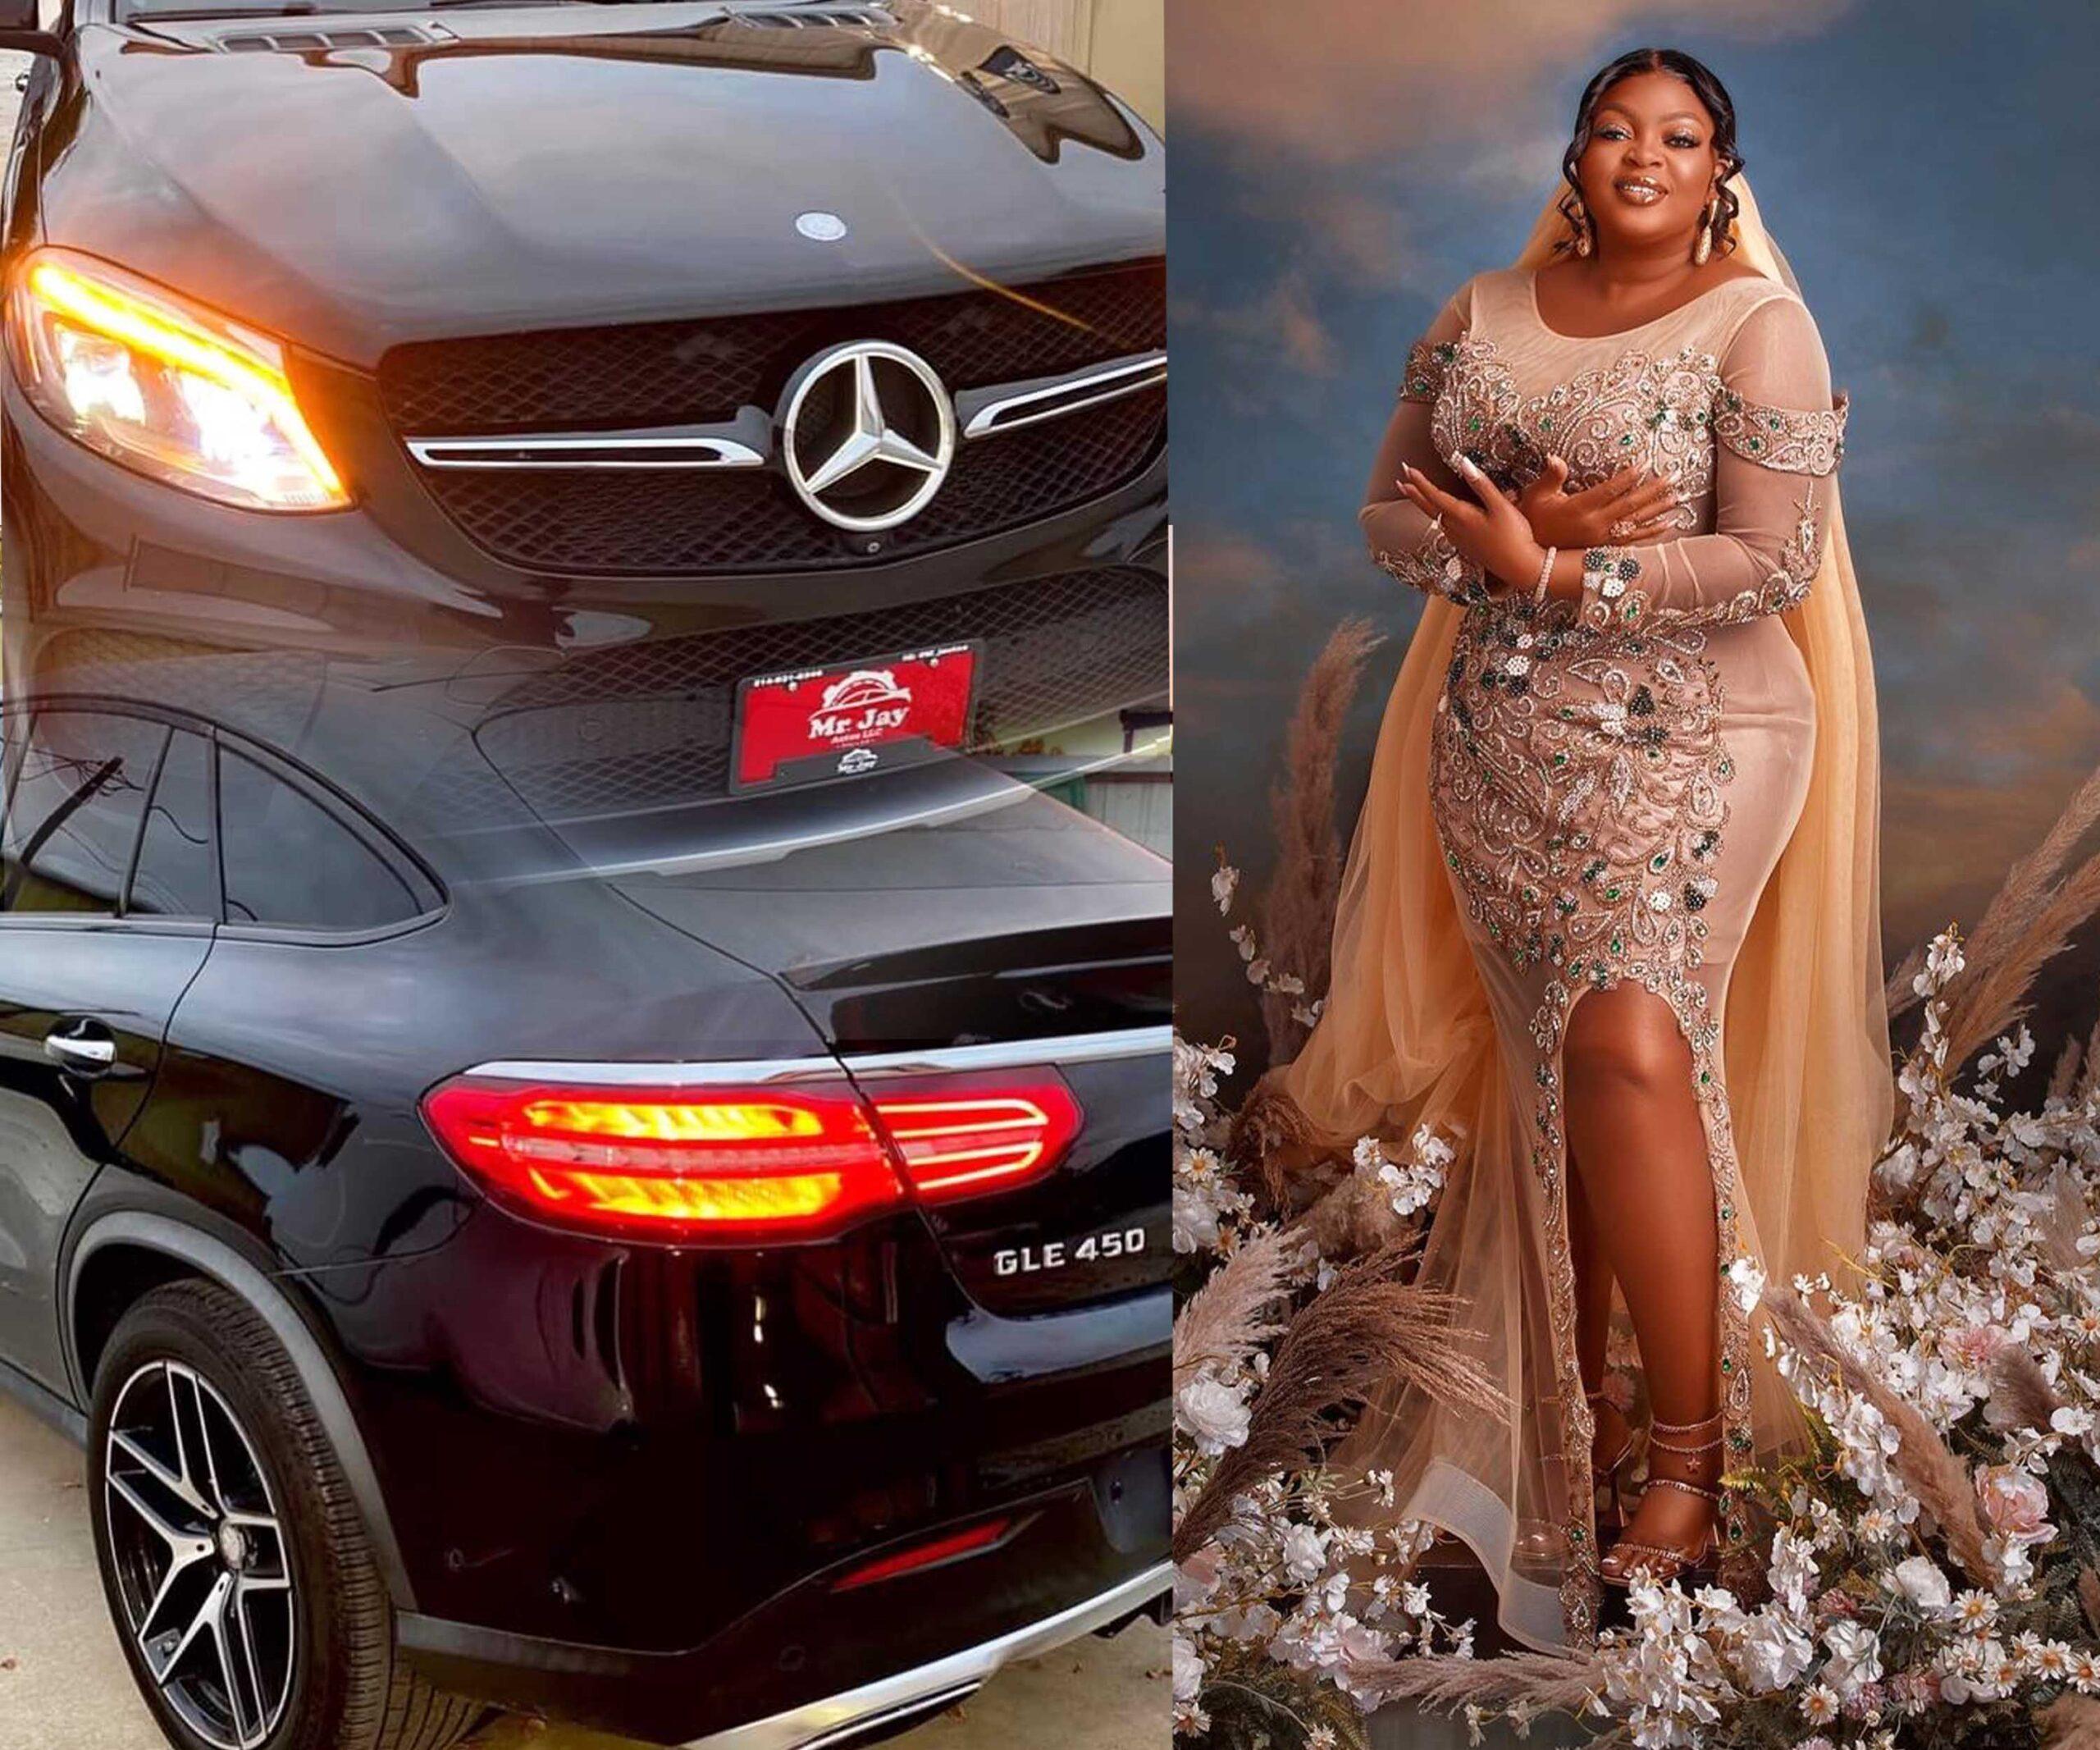  Price of Eniola Badmus’ Mercedes Benz GLE450 birthday Coupe in Nigeria